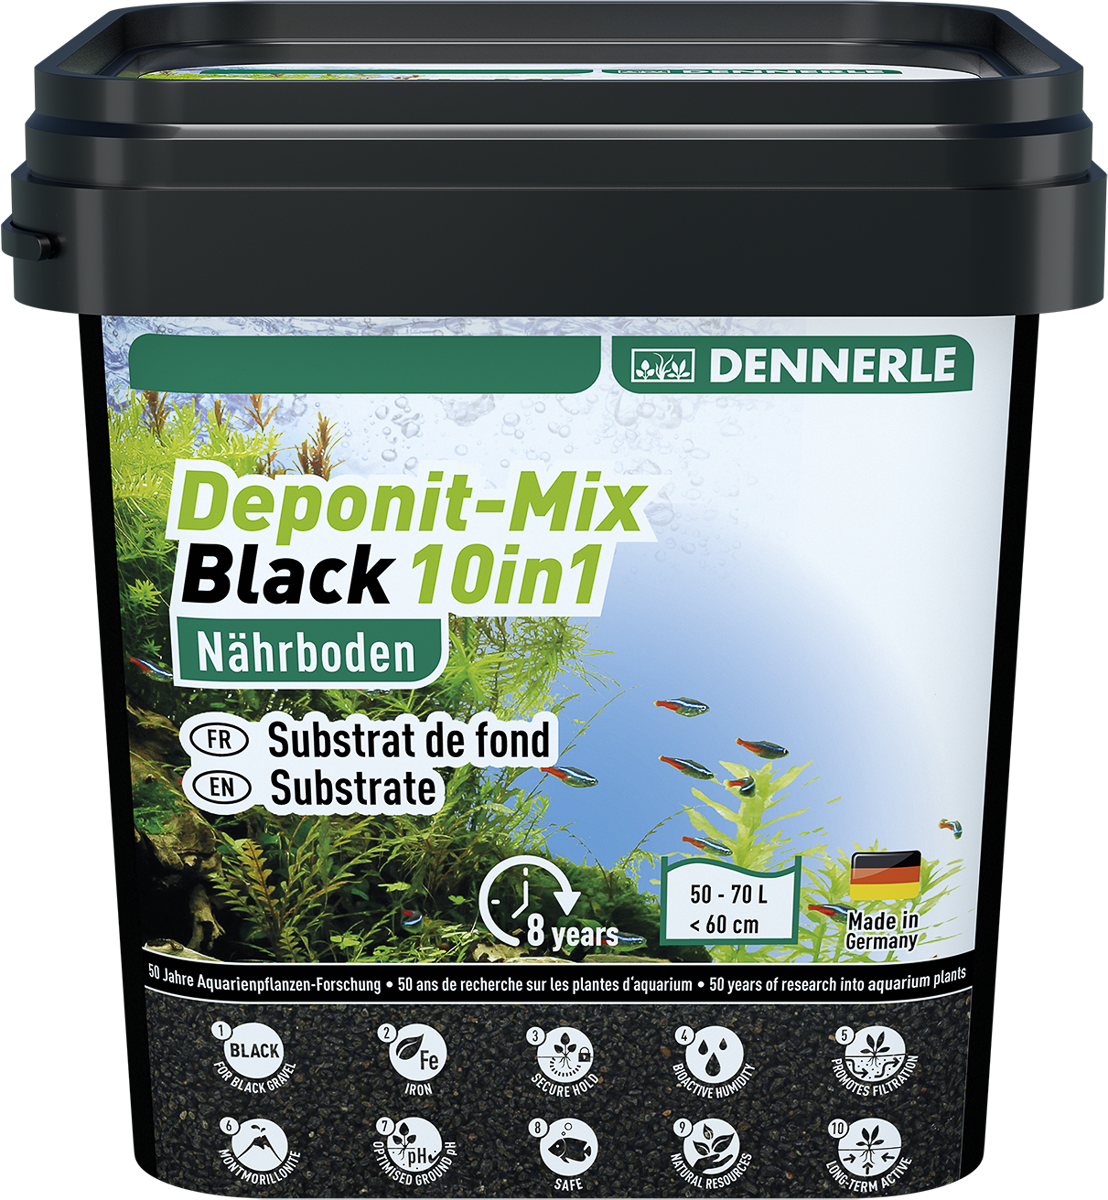 Dennerle Deponit-mix Black 10in1